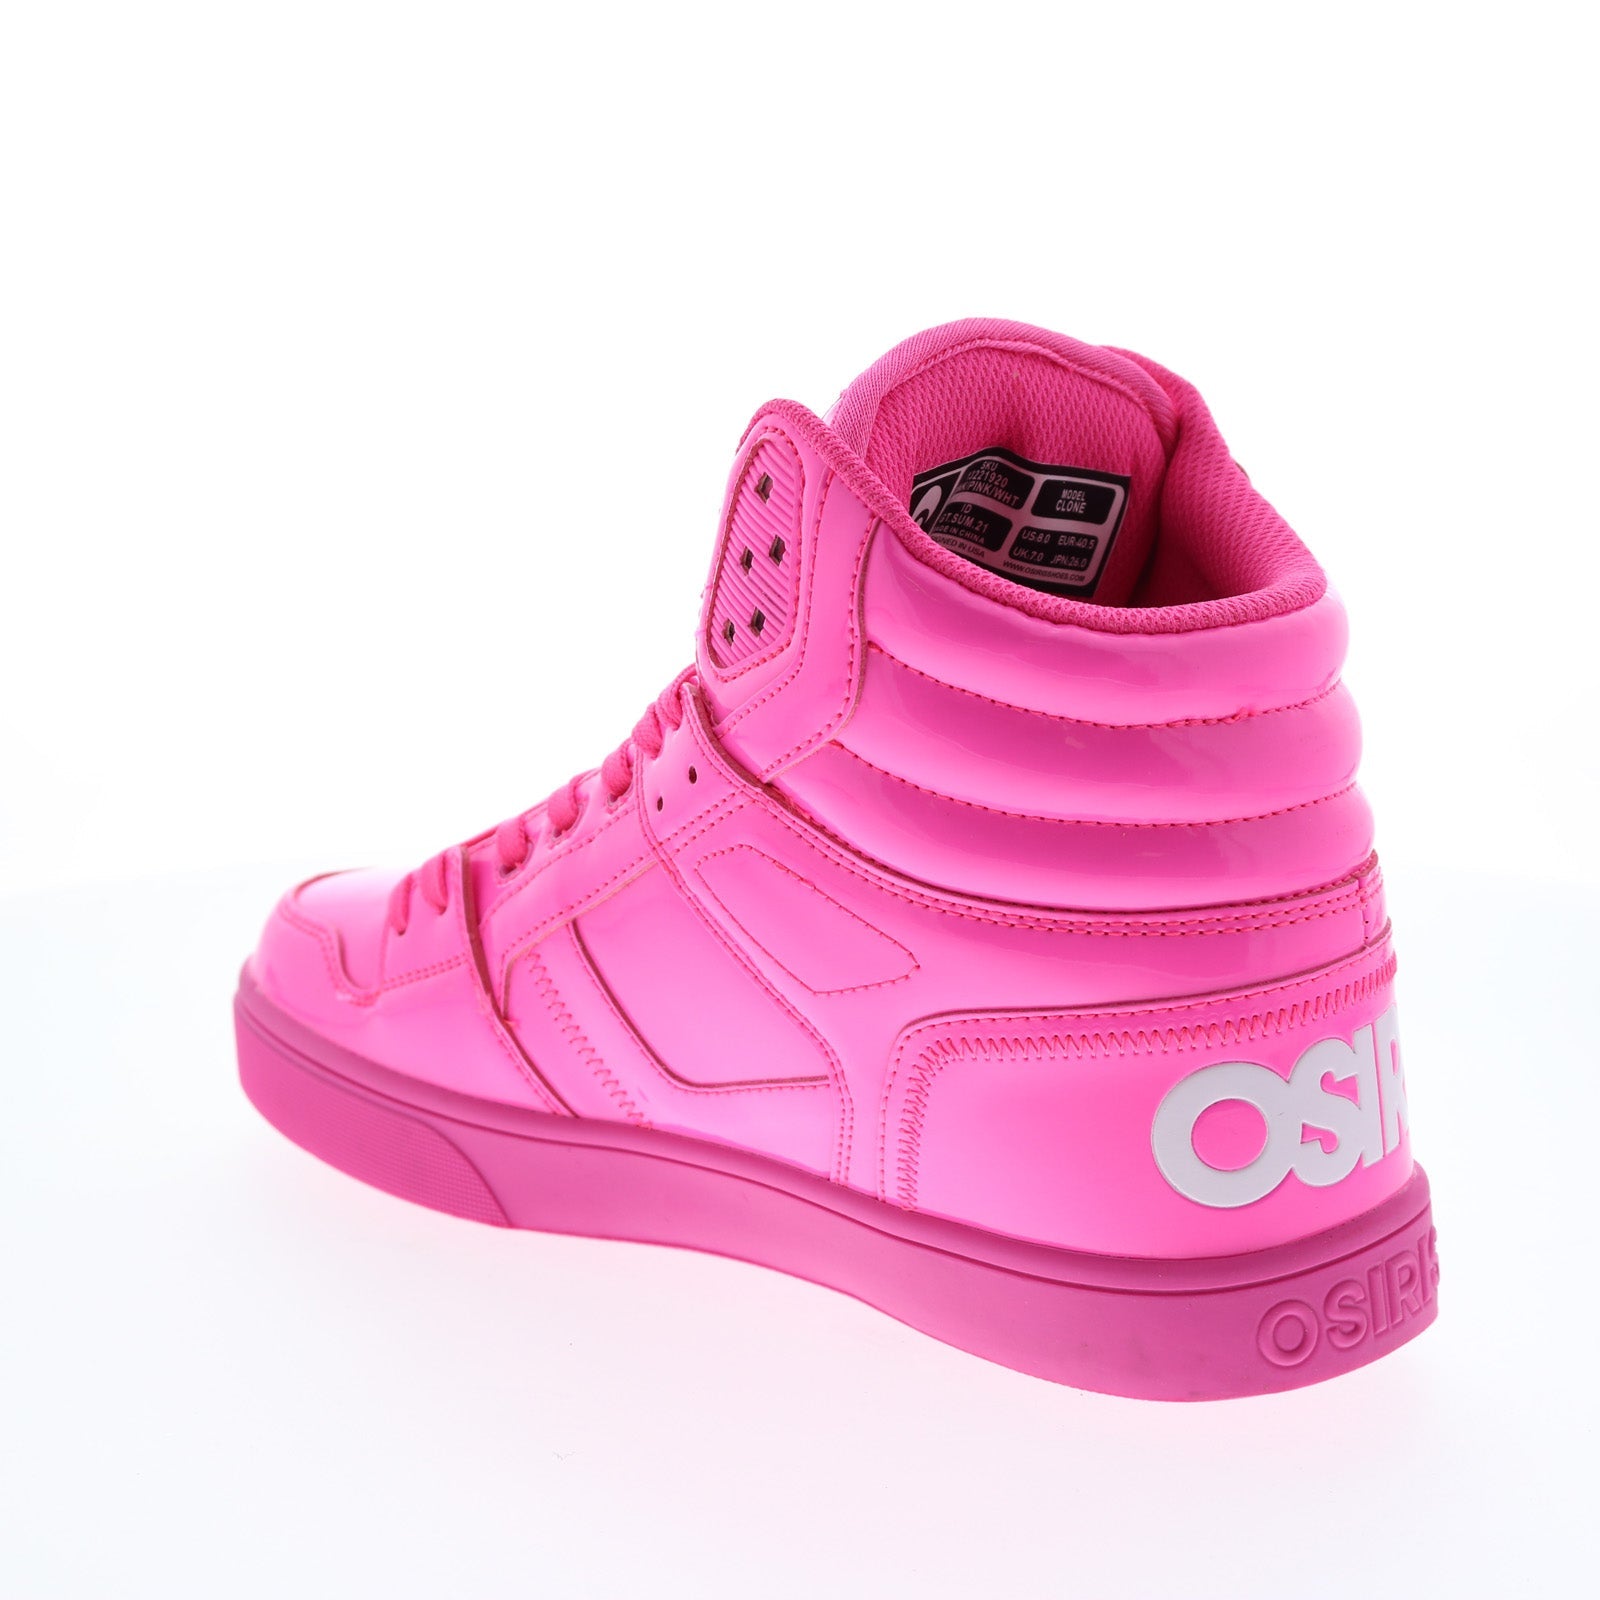 Osiris D3 2001 1141 2625 Mens Pink Synthetic Skate Inspired